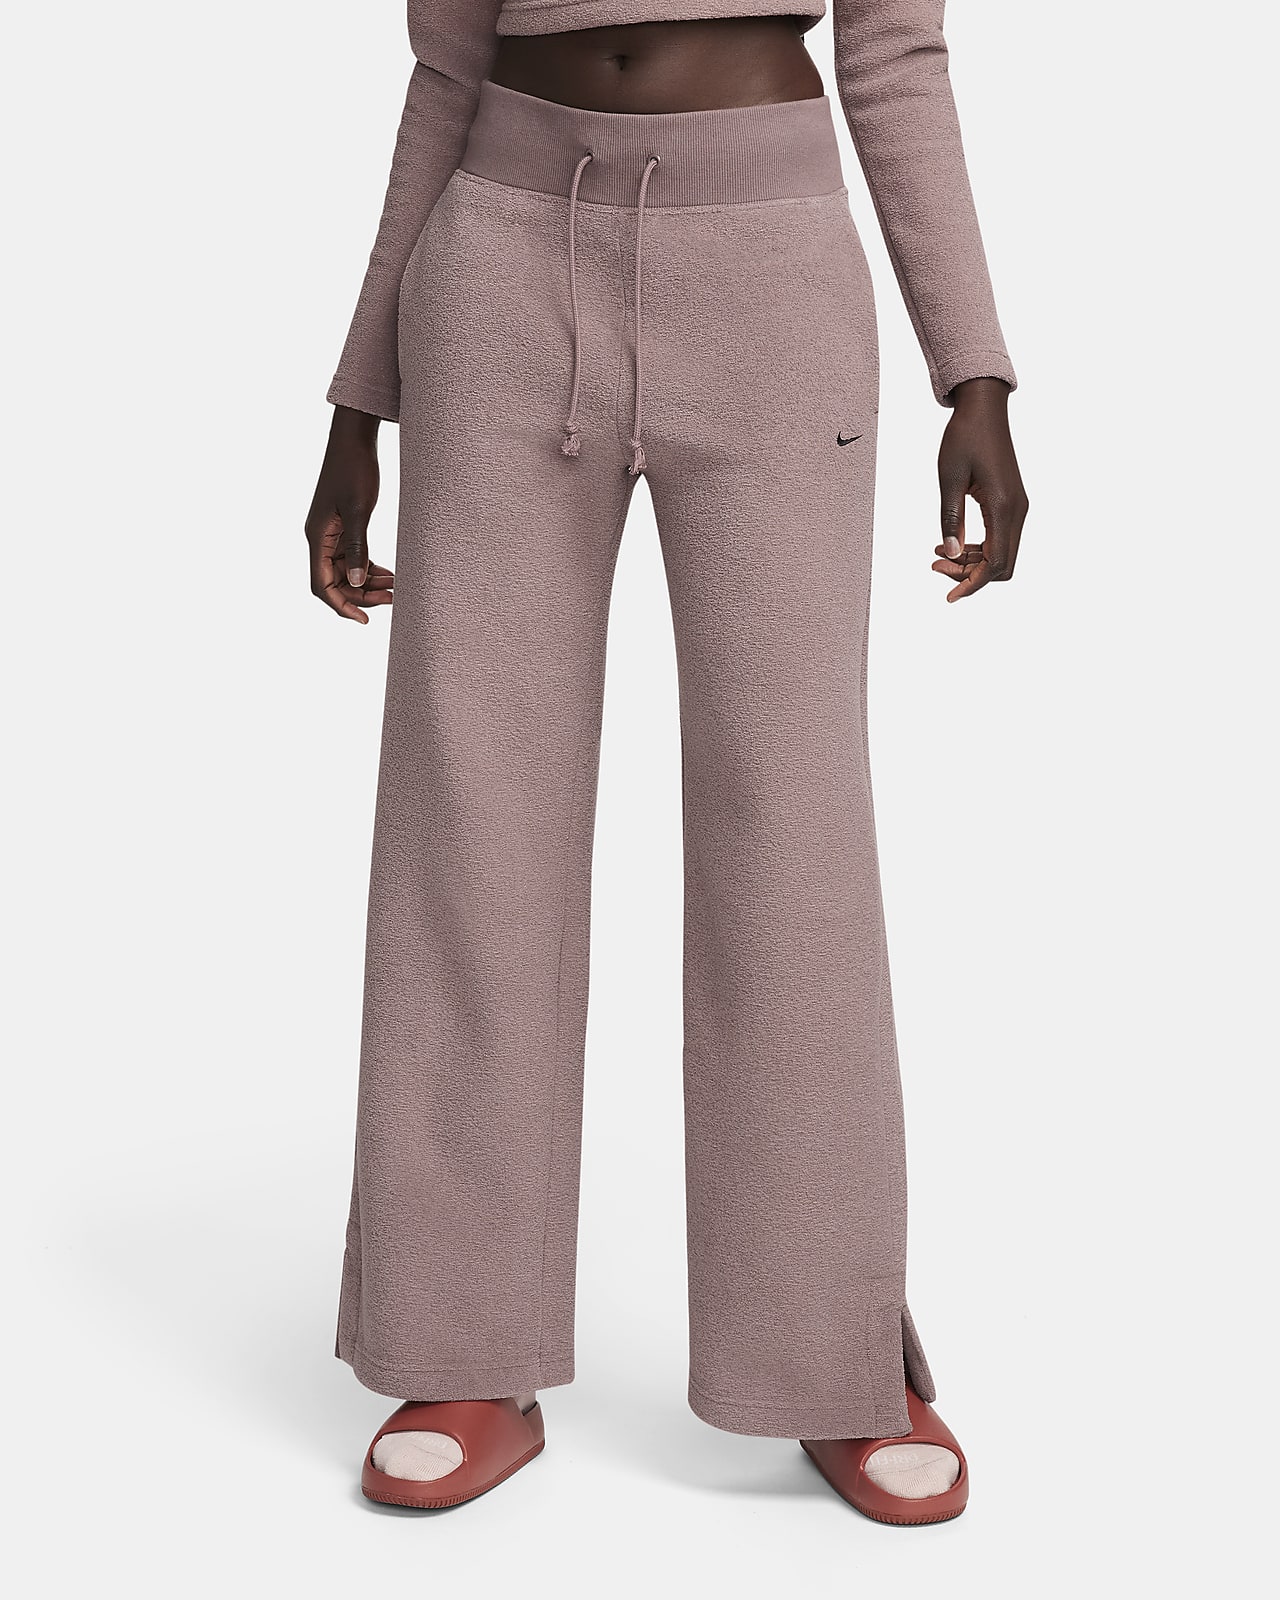 Nike Sportswear Phoenix Plush Pantalons de cintura alta, camals amples i teixit Fleece suau - Dona